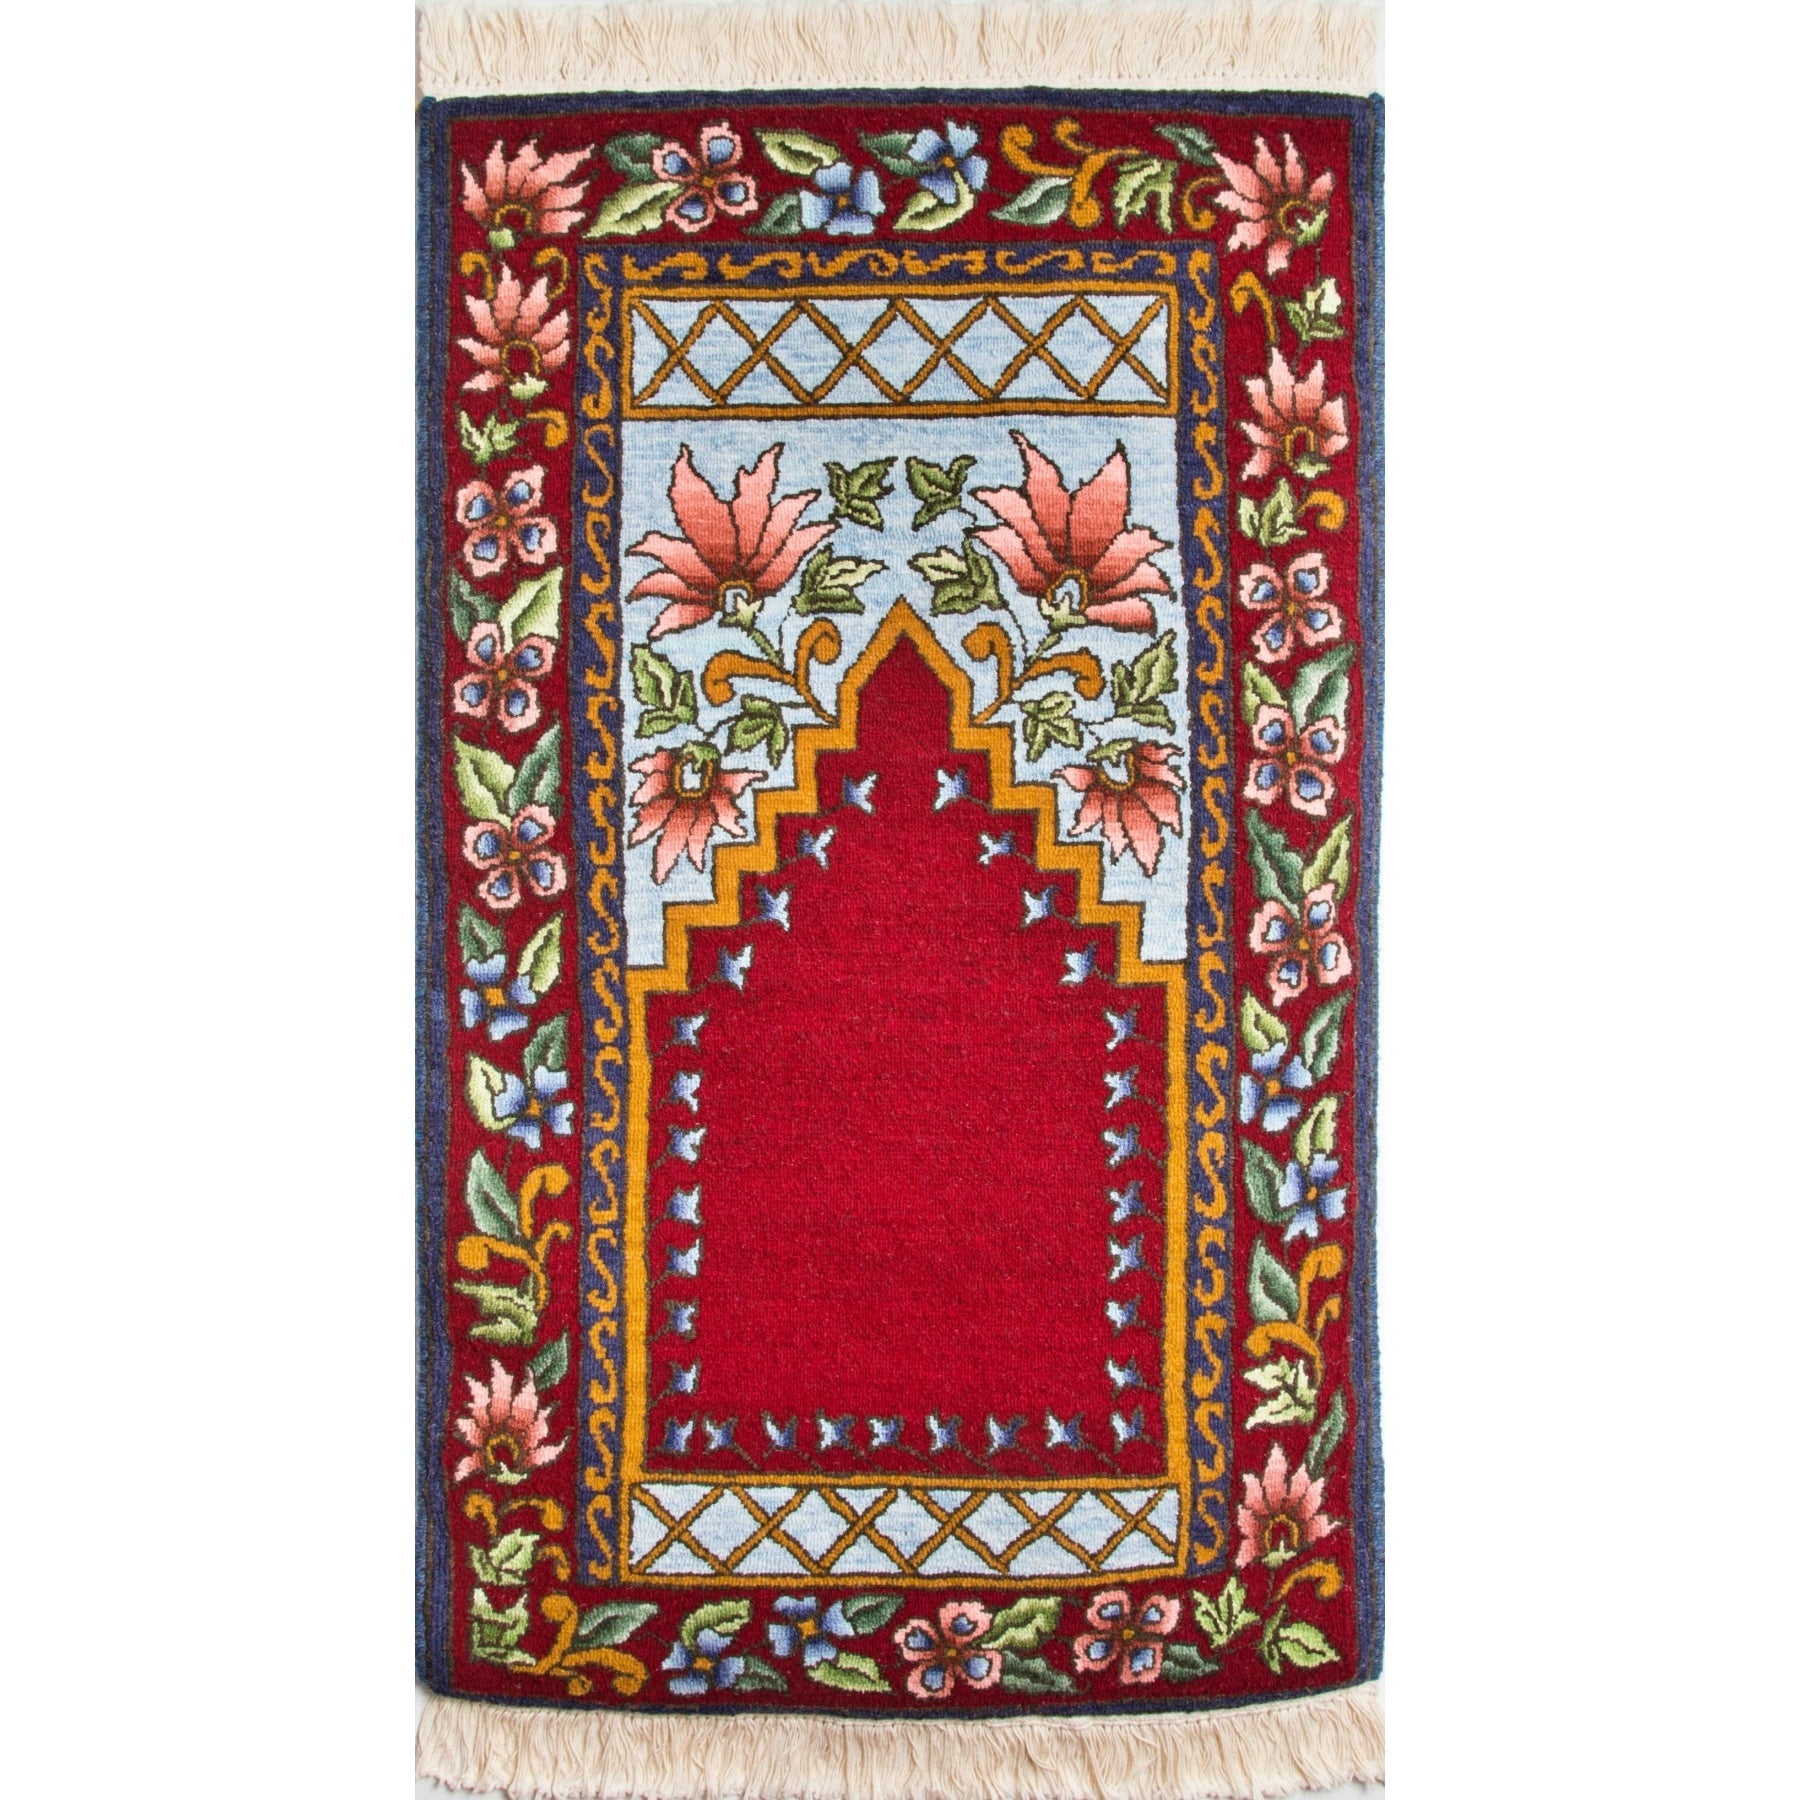 Charity Prayer, rug hooked by Elizabeth Ramscar